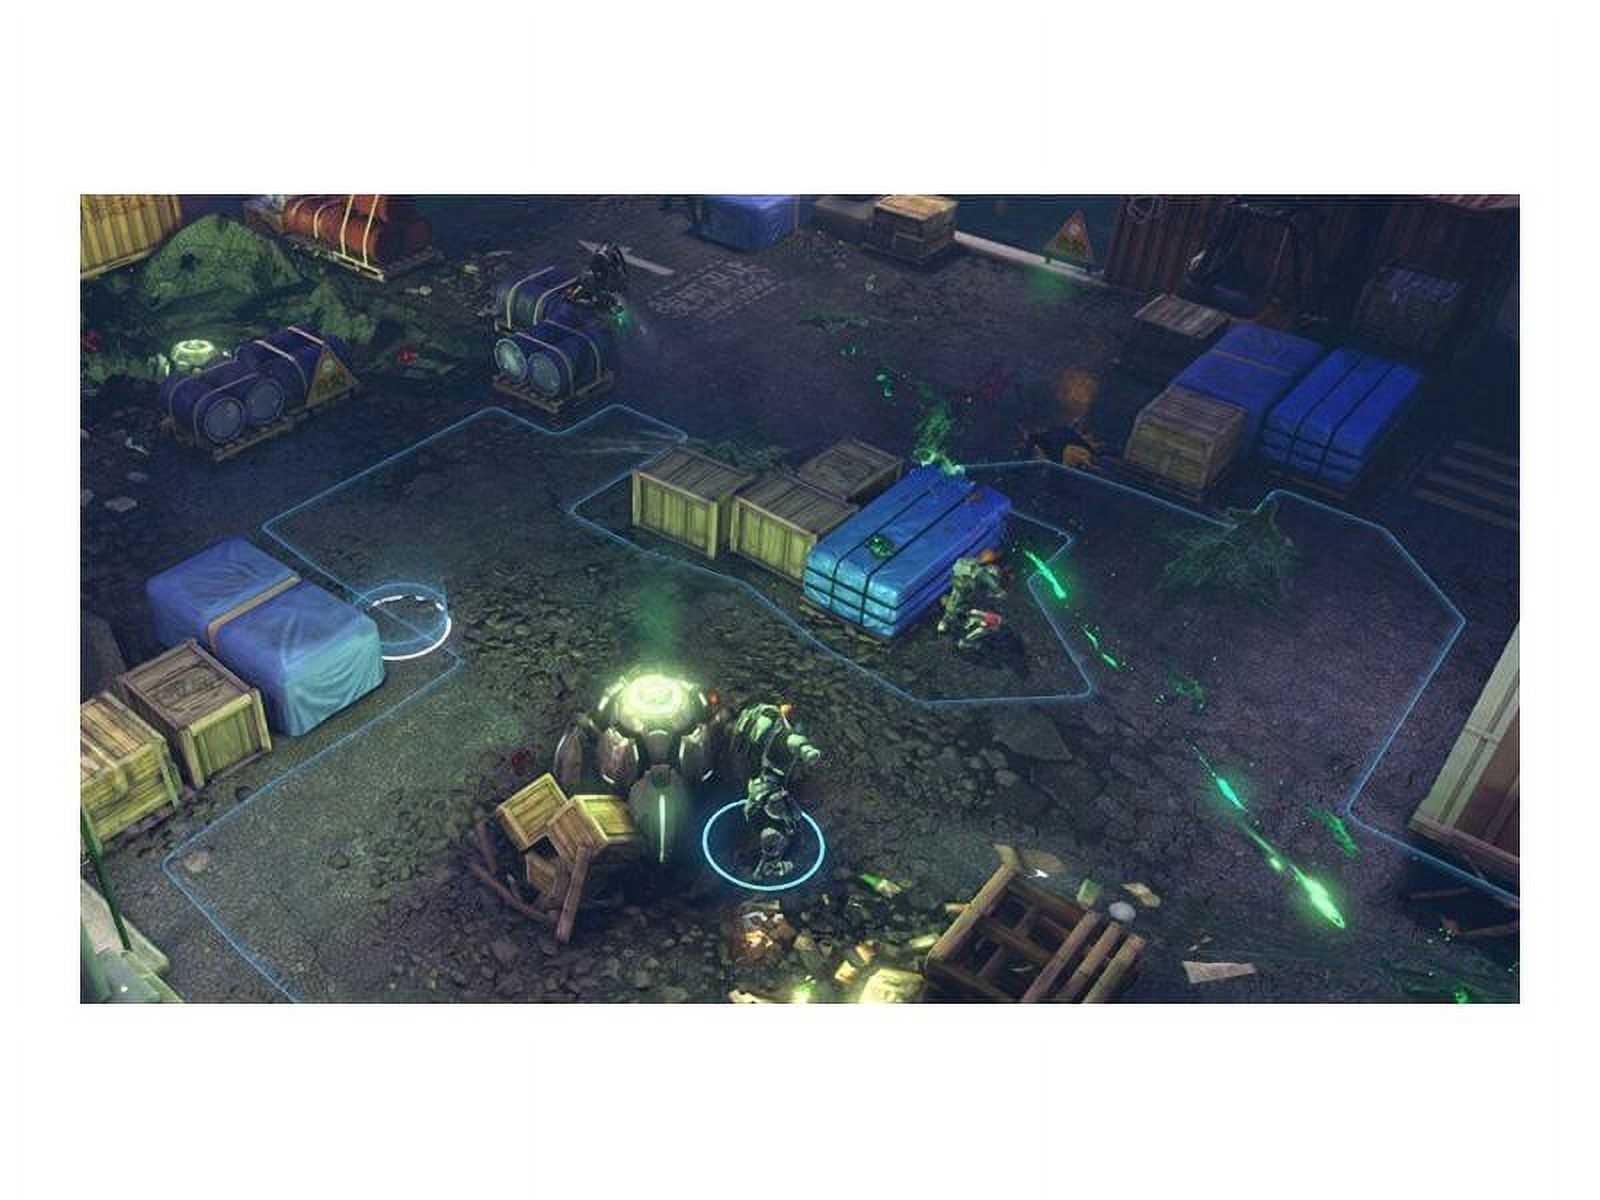 XCOM: Enemy Unknown - image 4 of 13